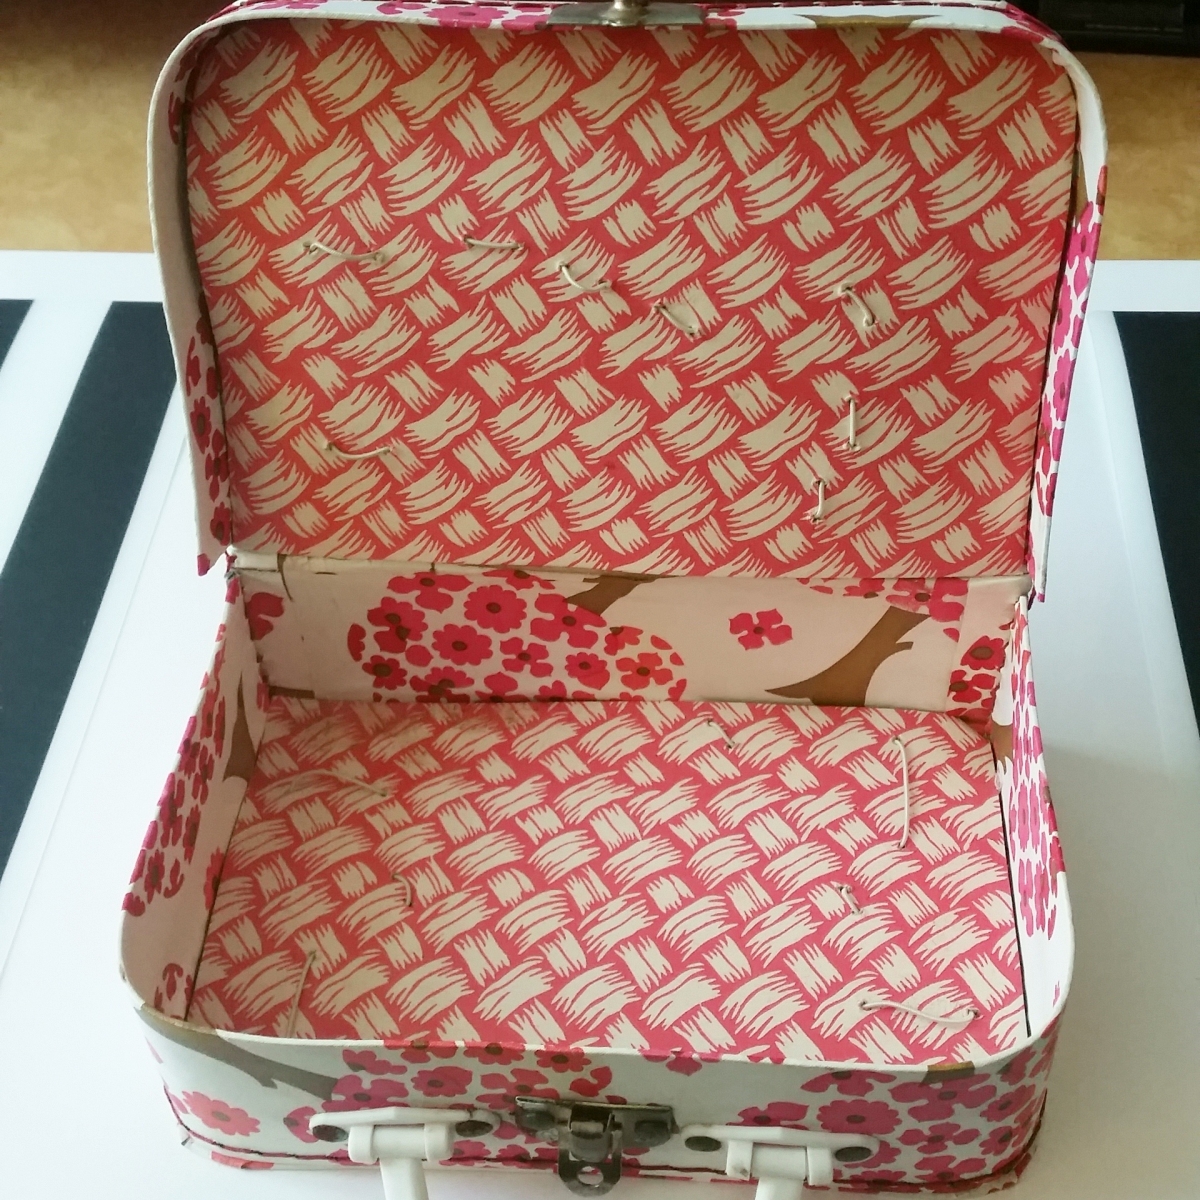 Grand fouet de cuisine ancien - Ma valise en carton